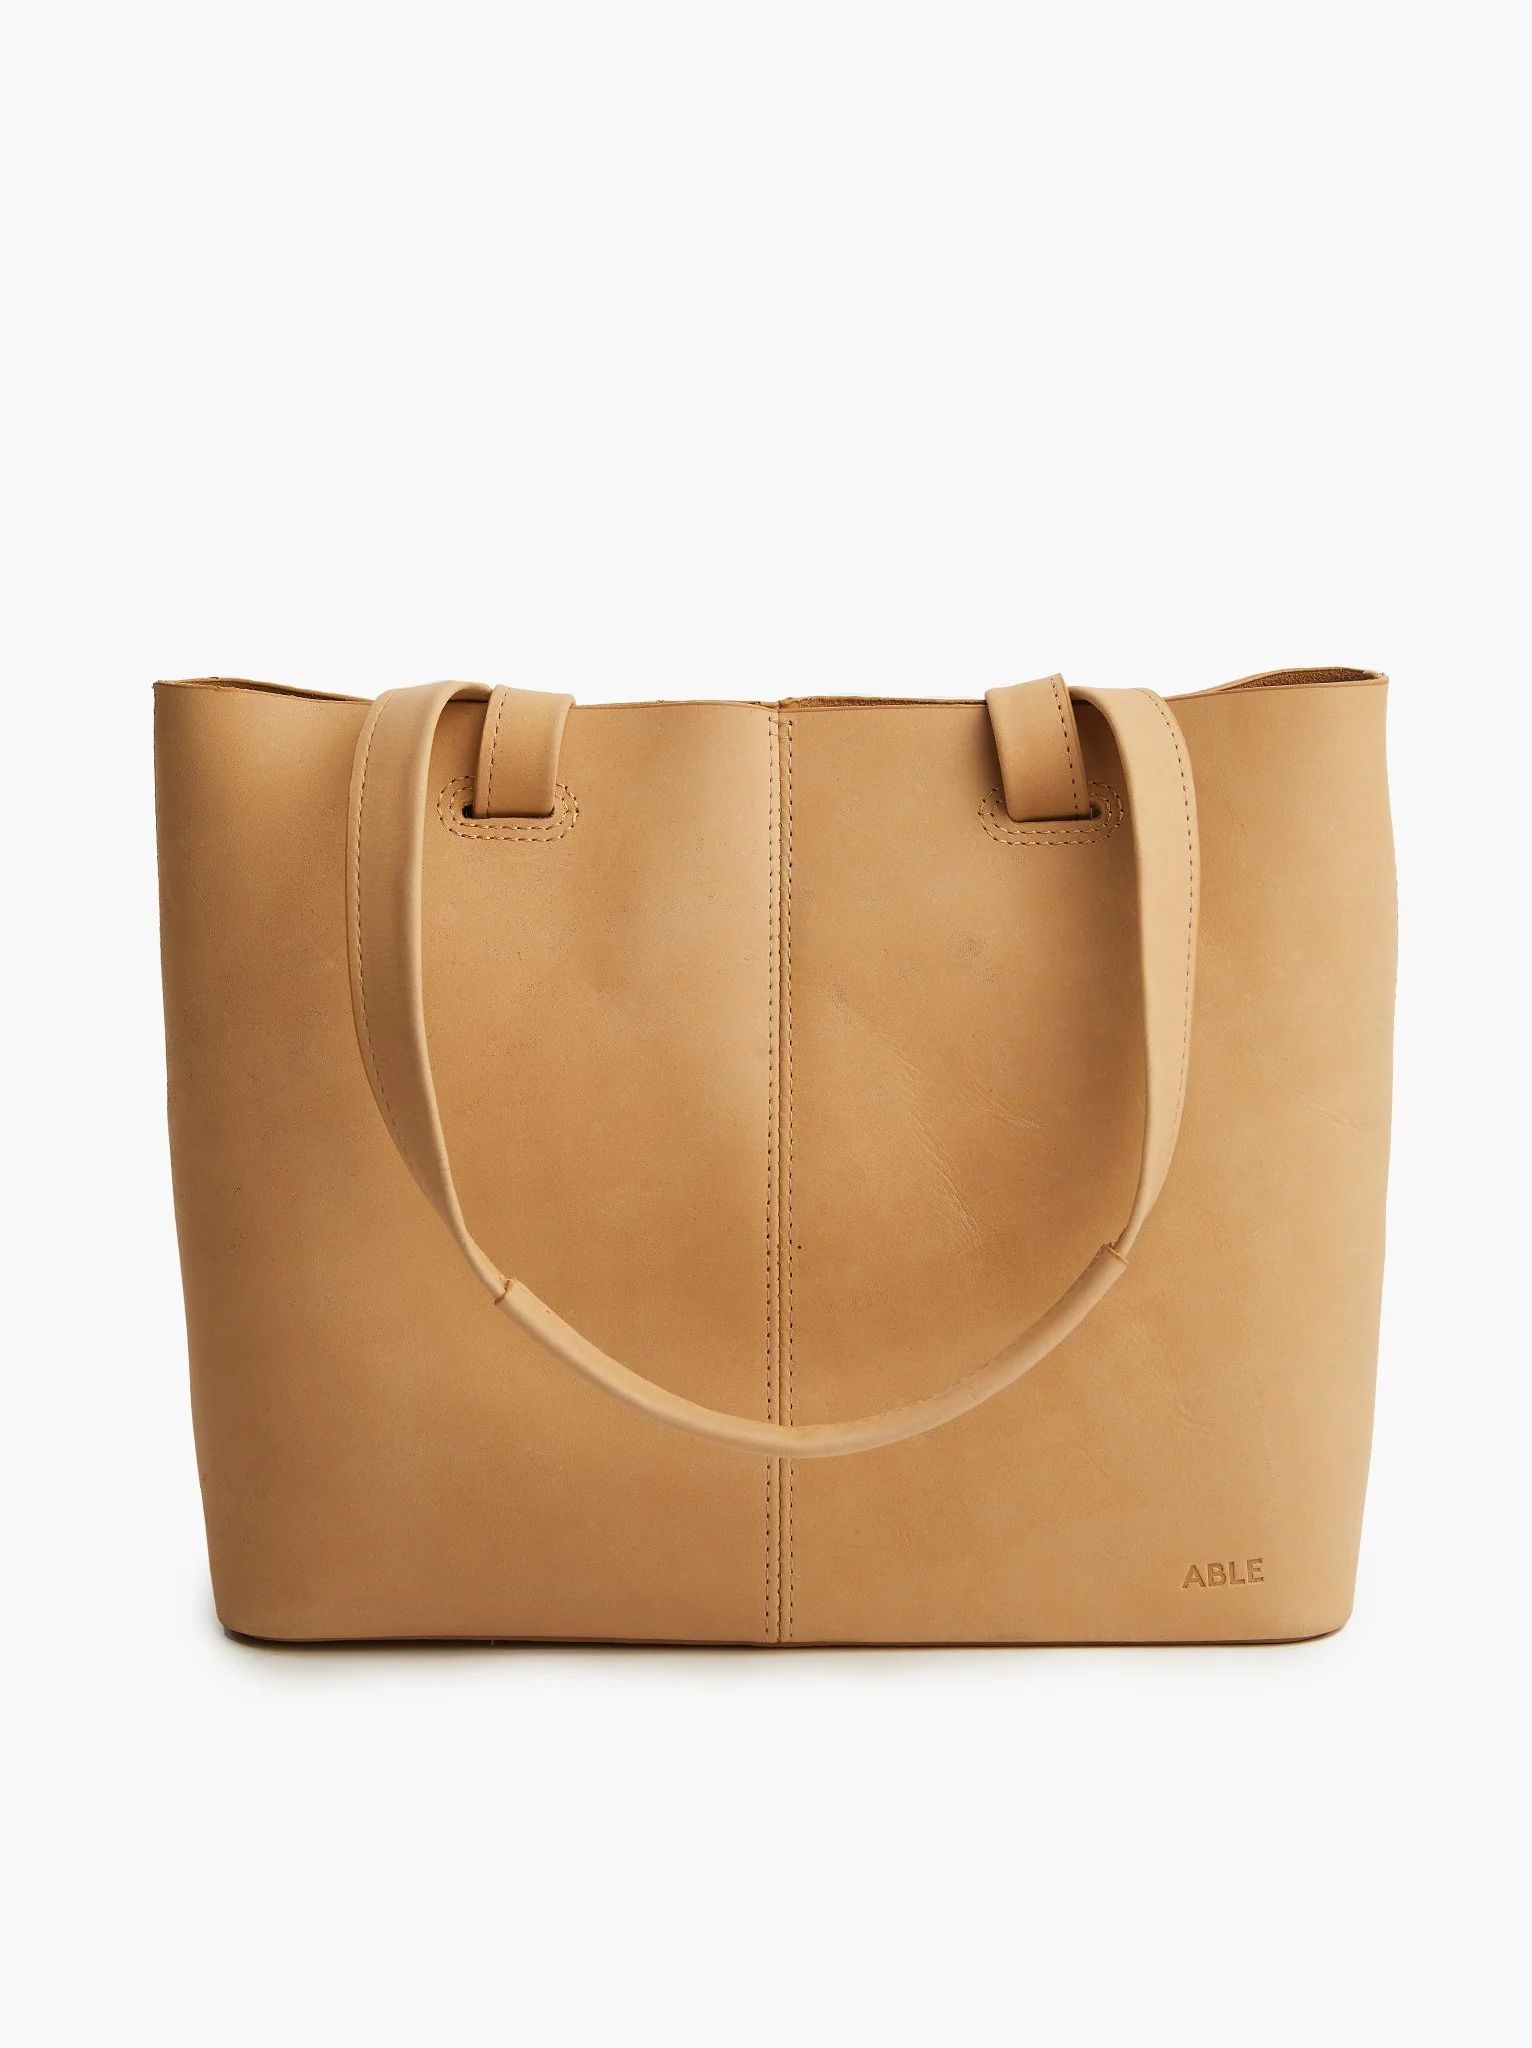 Nelita Shoulder Bag | ABLE